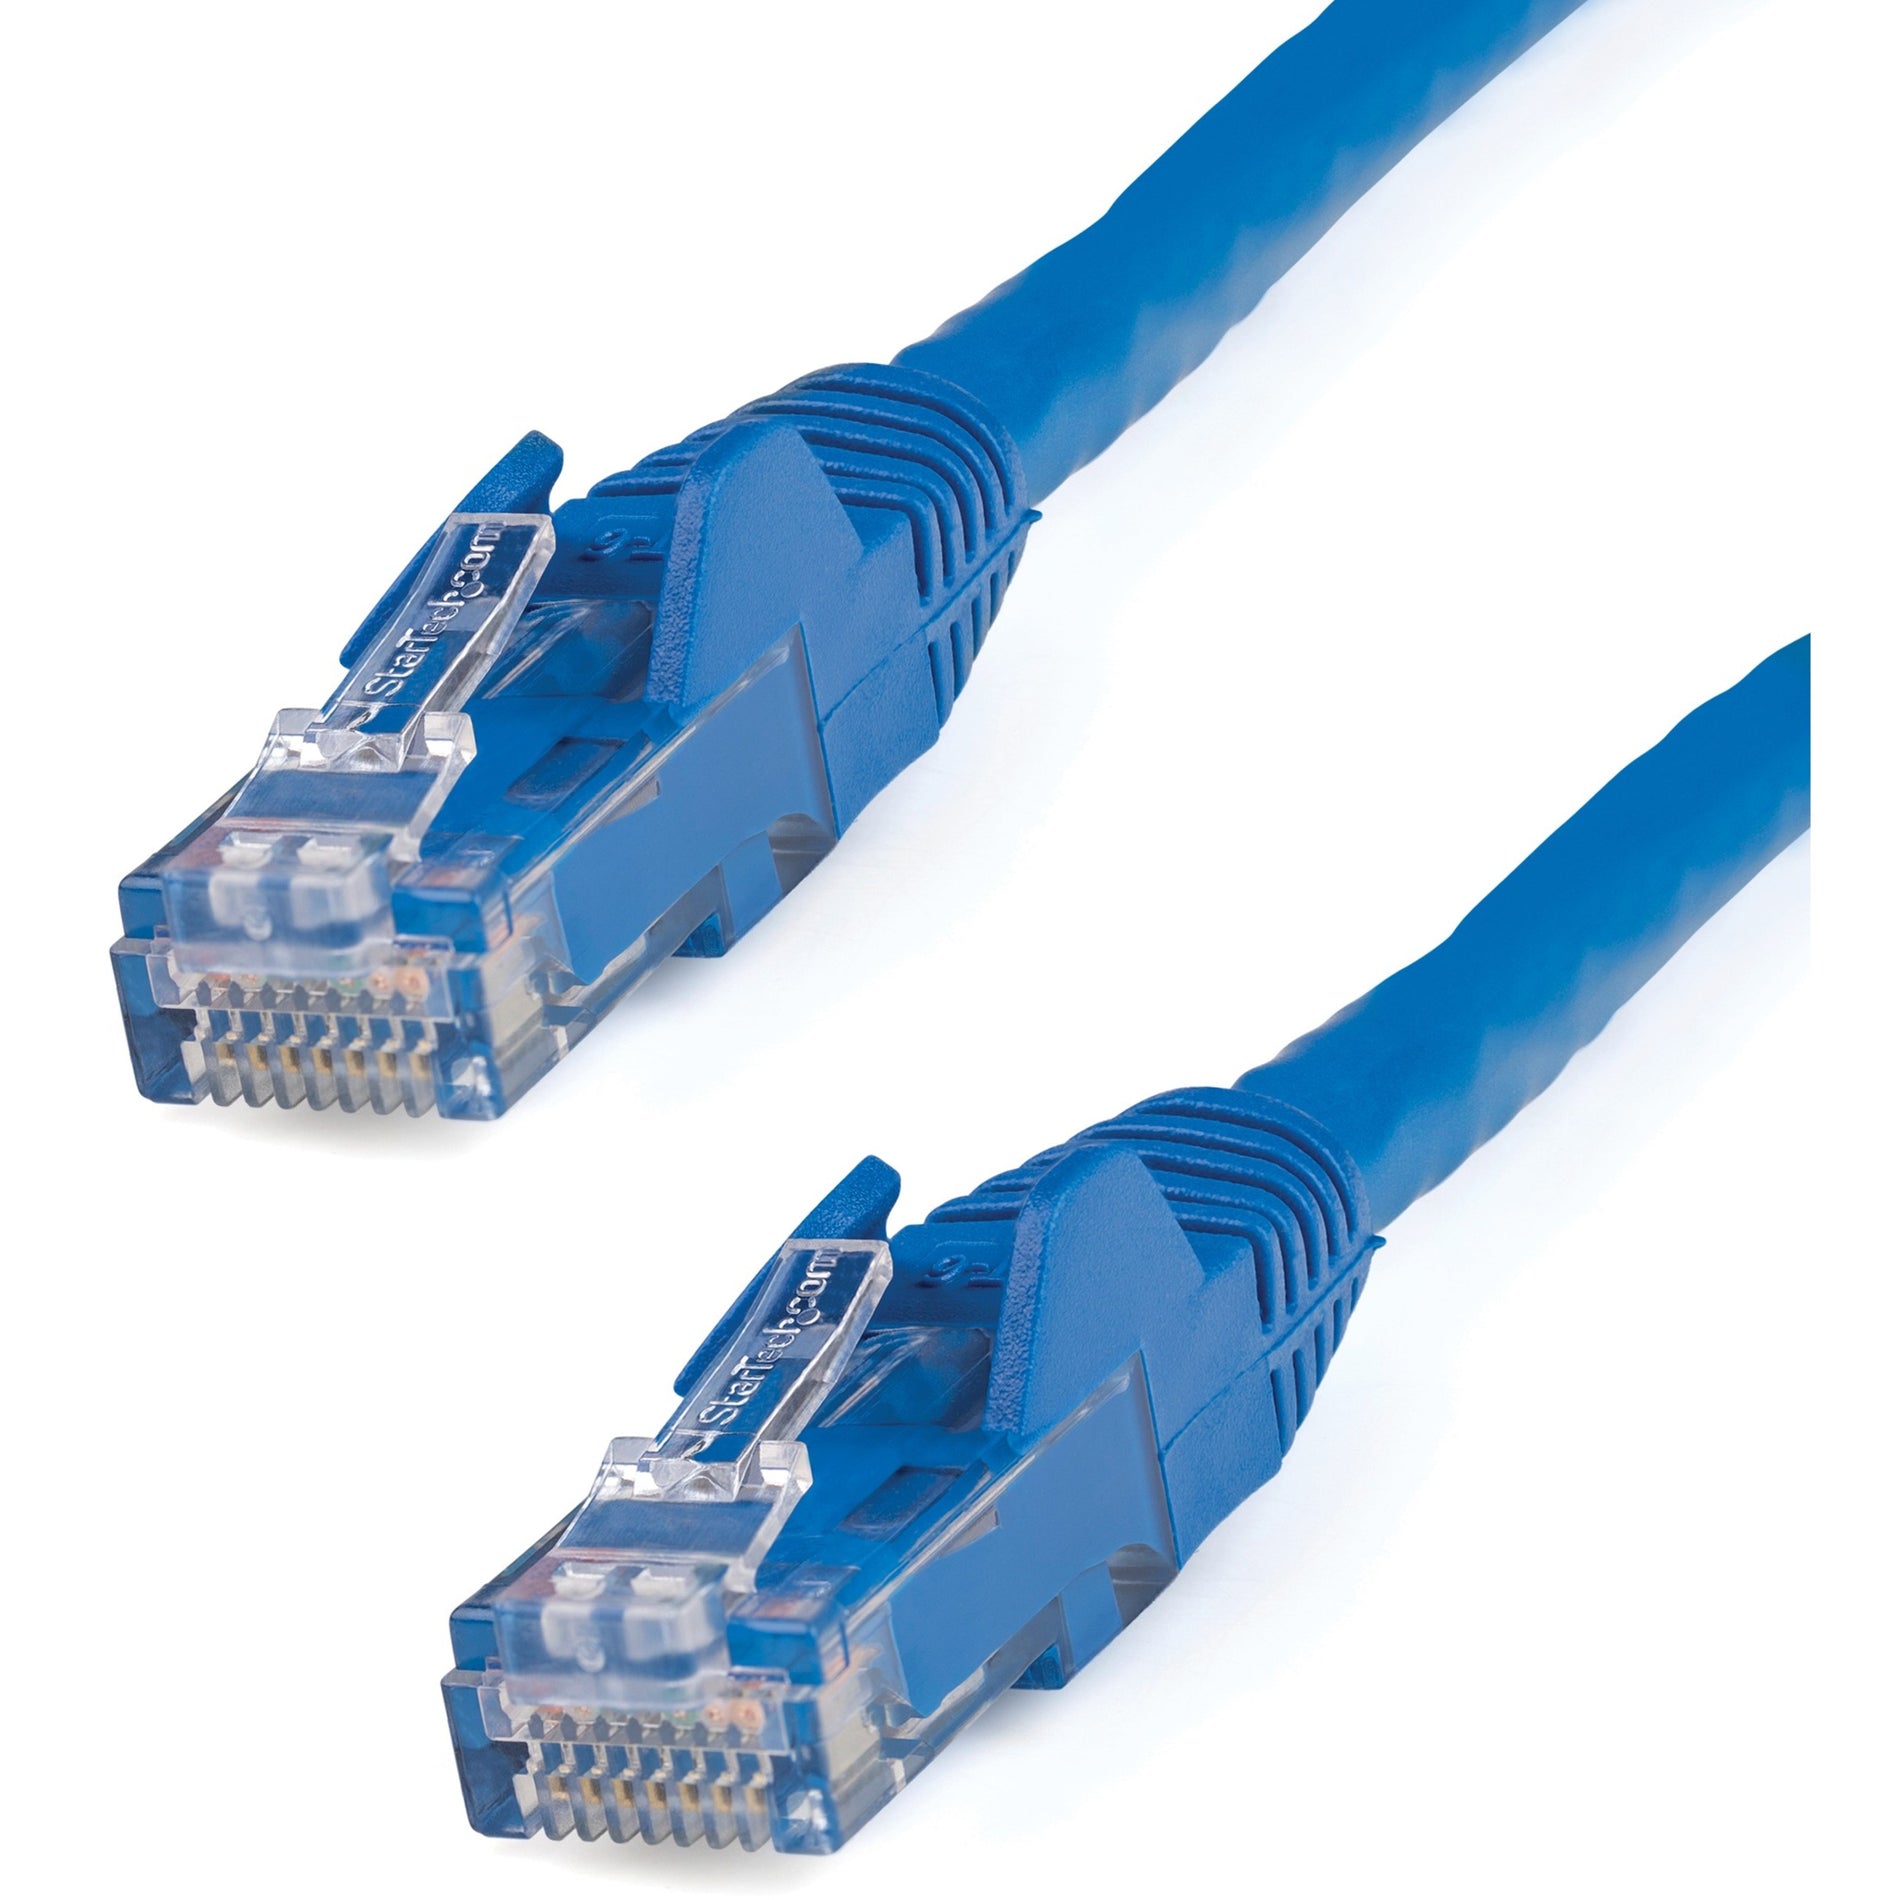 StarTech.com N6PATCH75BL 75 ft. Cat6 Patch Cable - Blue, Lifetime Warranty, Snagless, 10 Gbit/s Data Transfer Rate